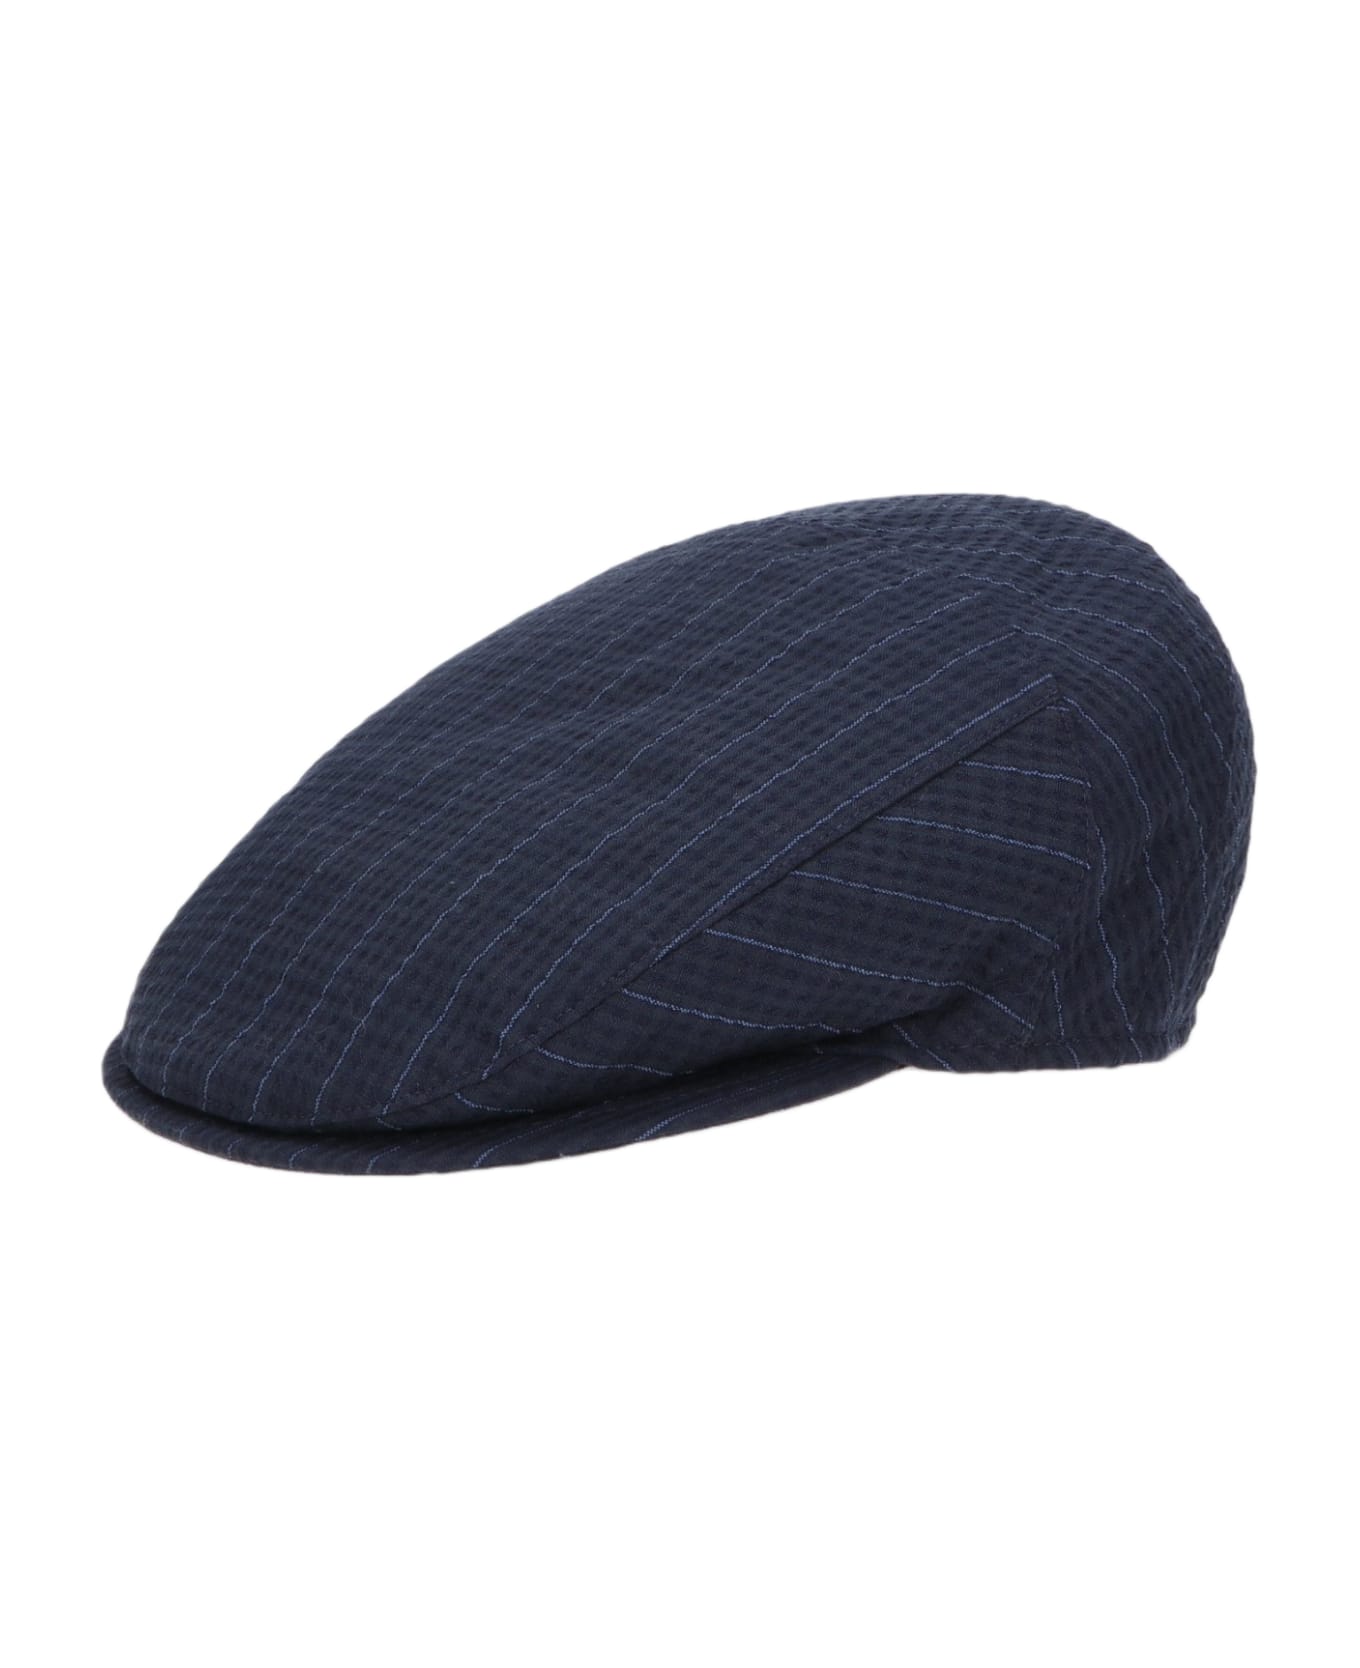 Borsalino Vincenzo Soft Flat Cap - BLACK/LIGHT BLUE STRIPES 帽子